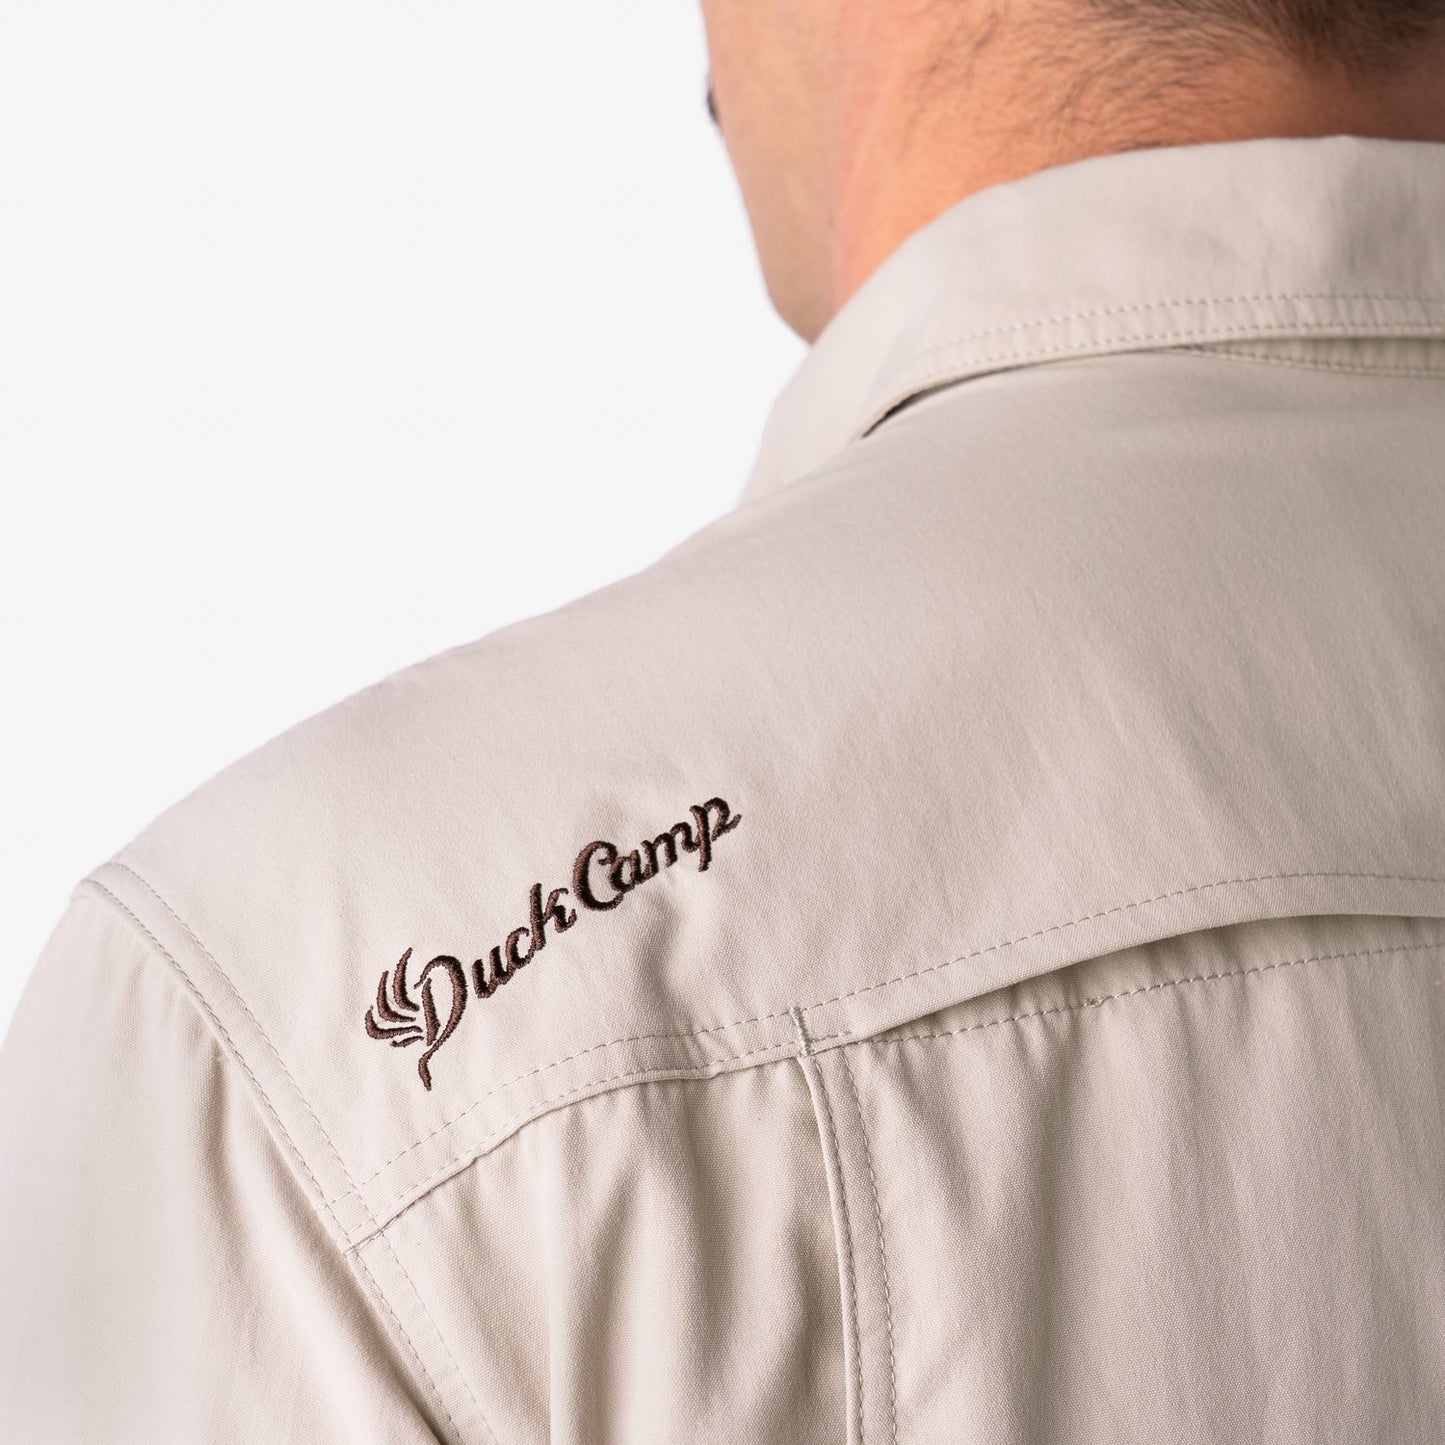 Duck Camp Bone Long Sleeve Lightweight Hunting Shirt